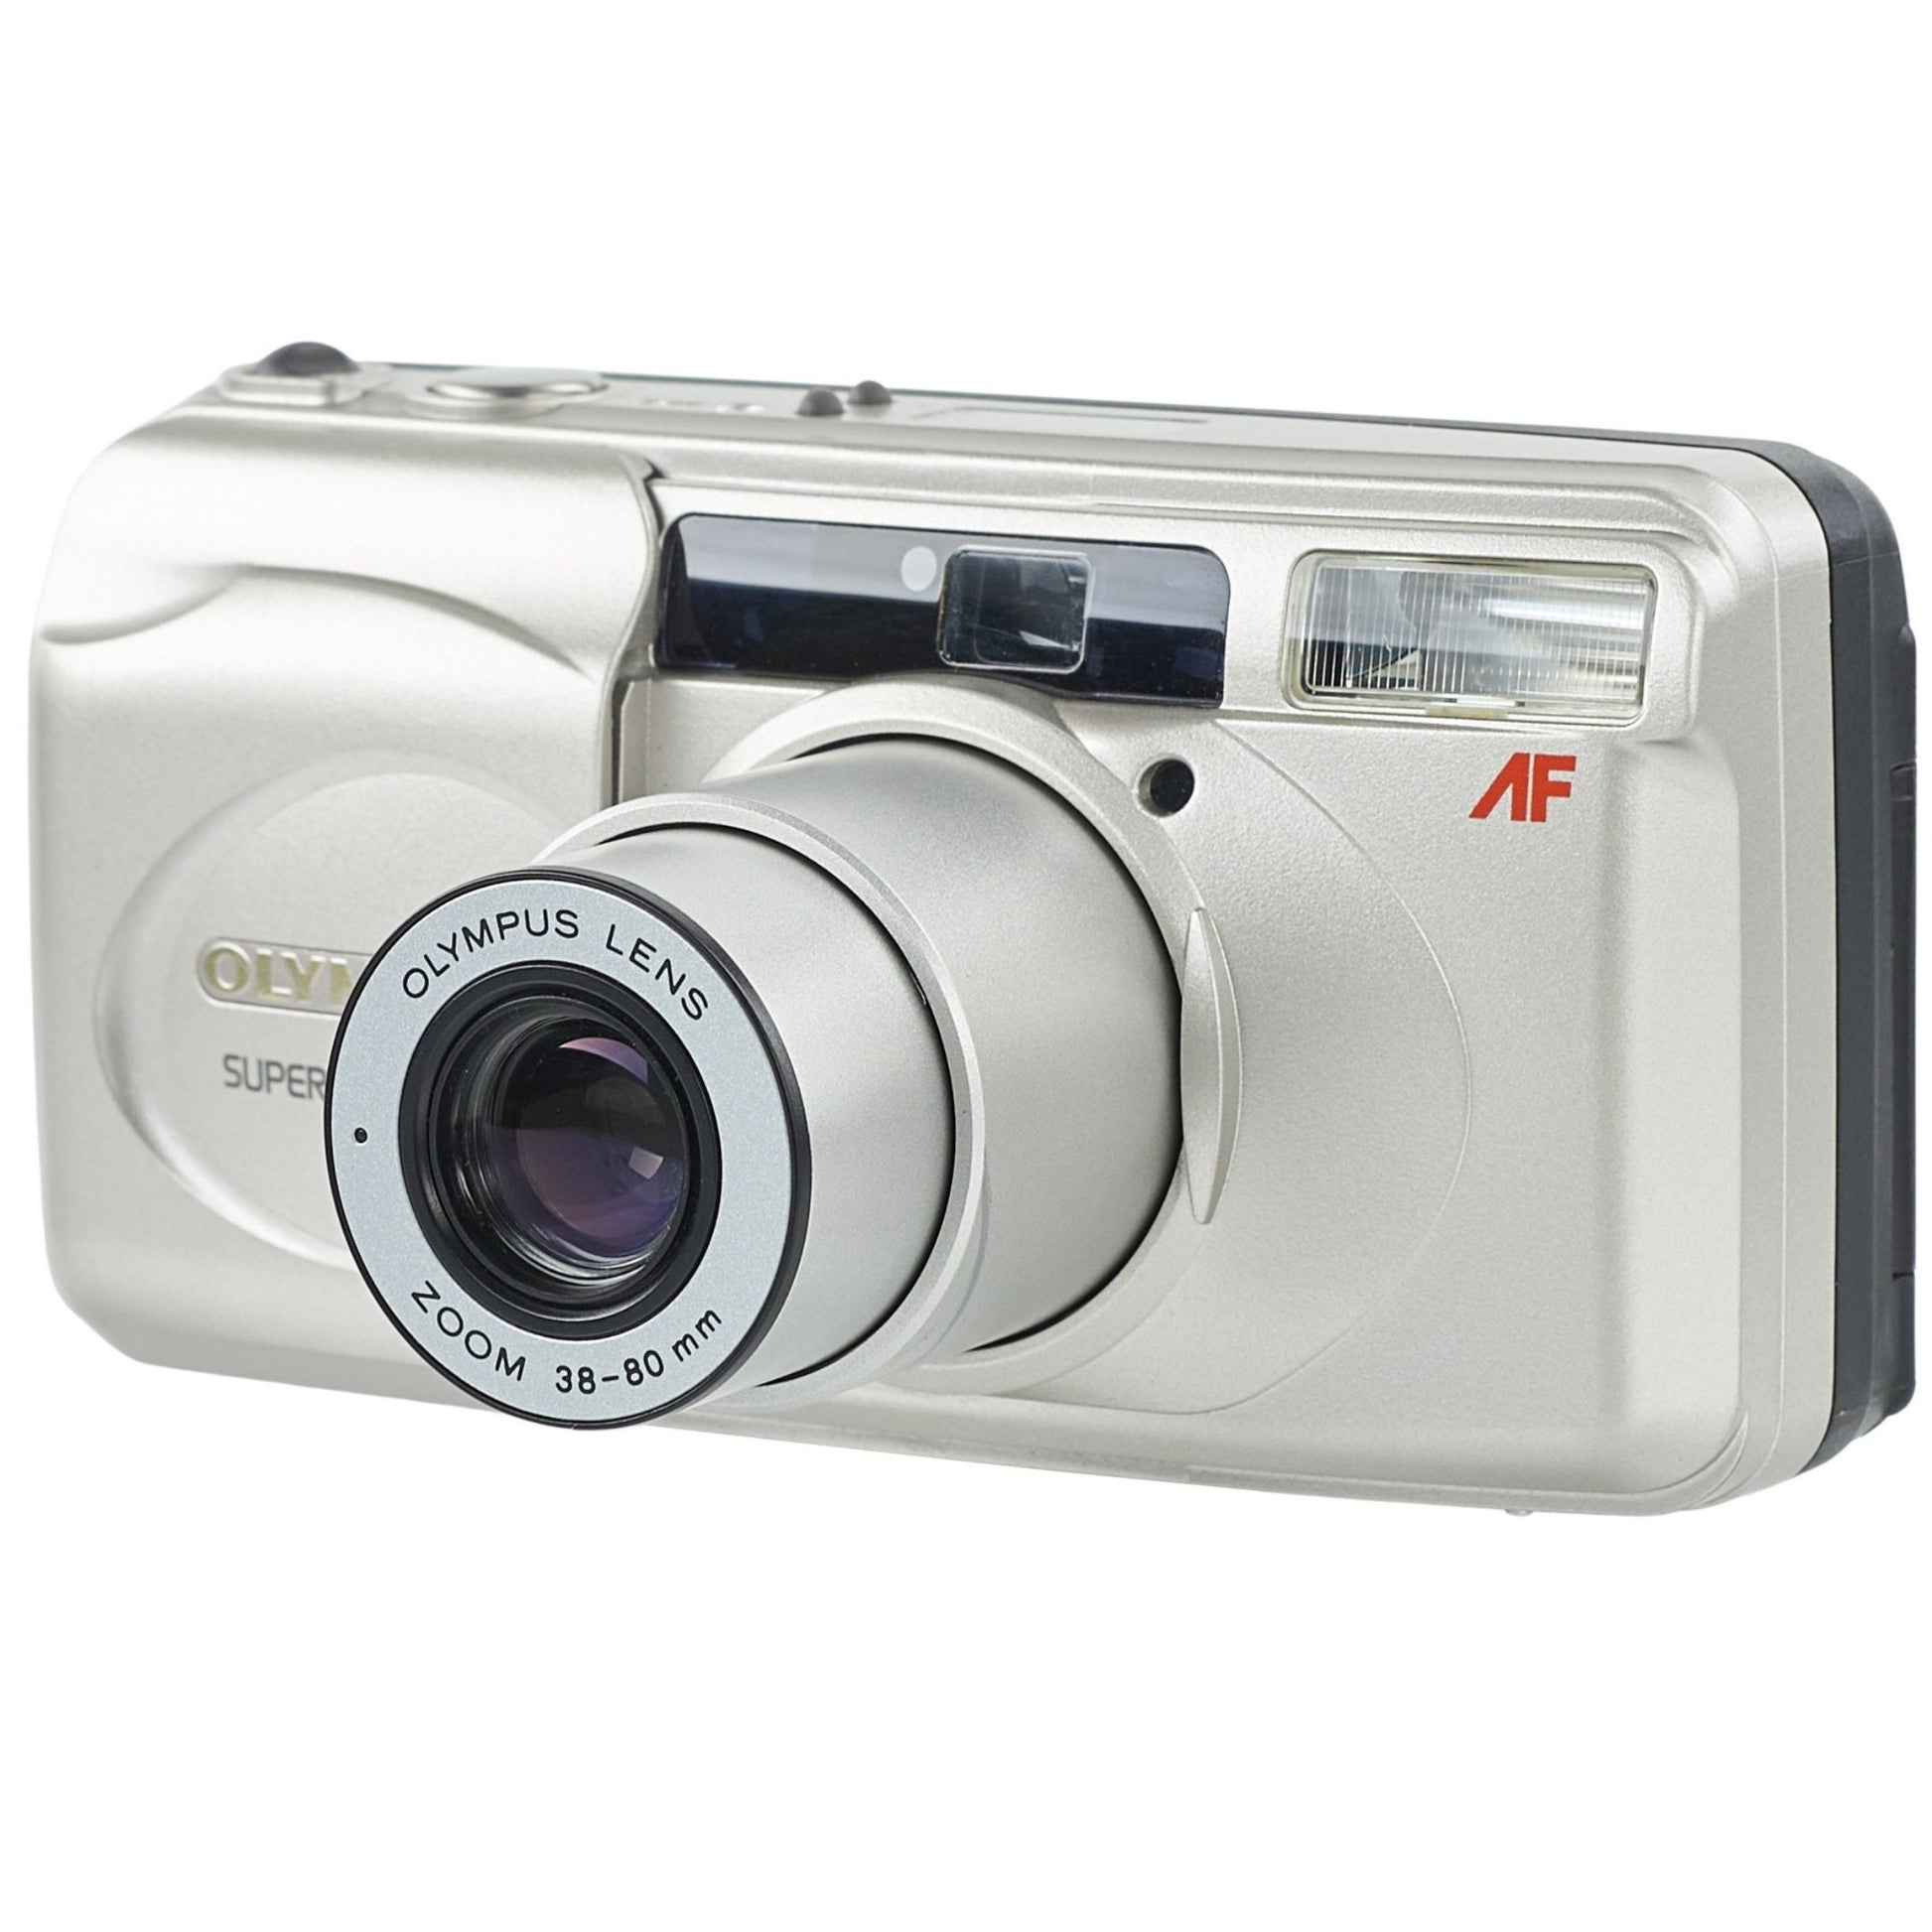 NEW ARRIVAL!! Olympus Superzoom 80G, Working Film Camera, Vintage Camera - Vintage Polaroid Instant Cameras